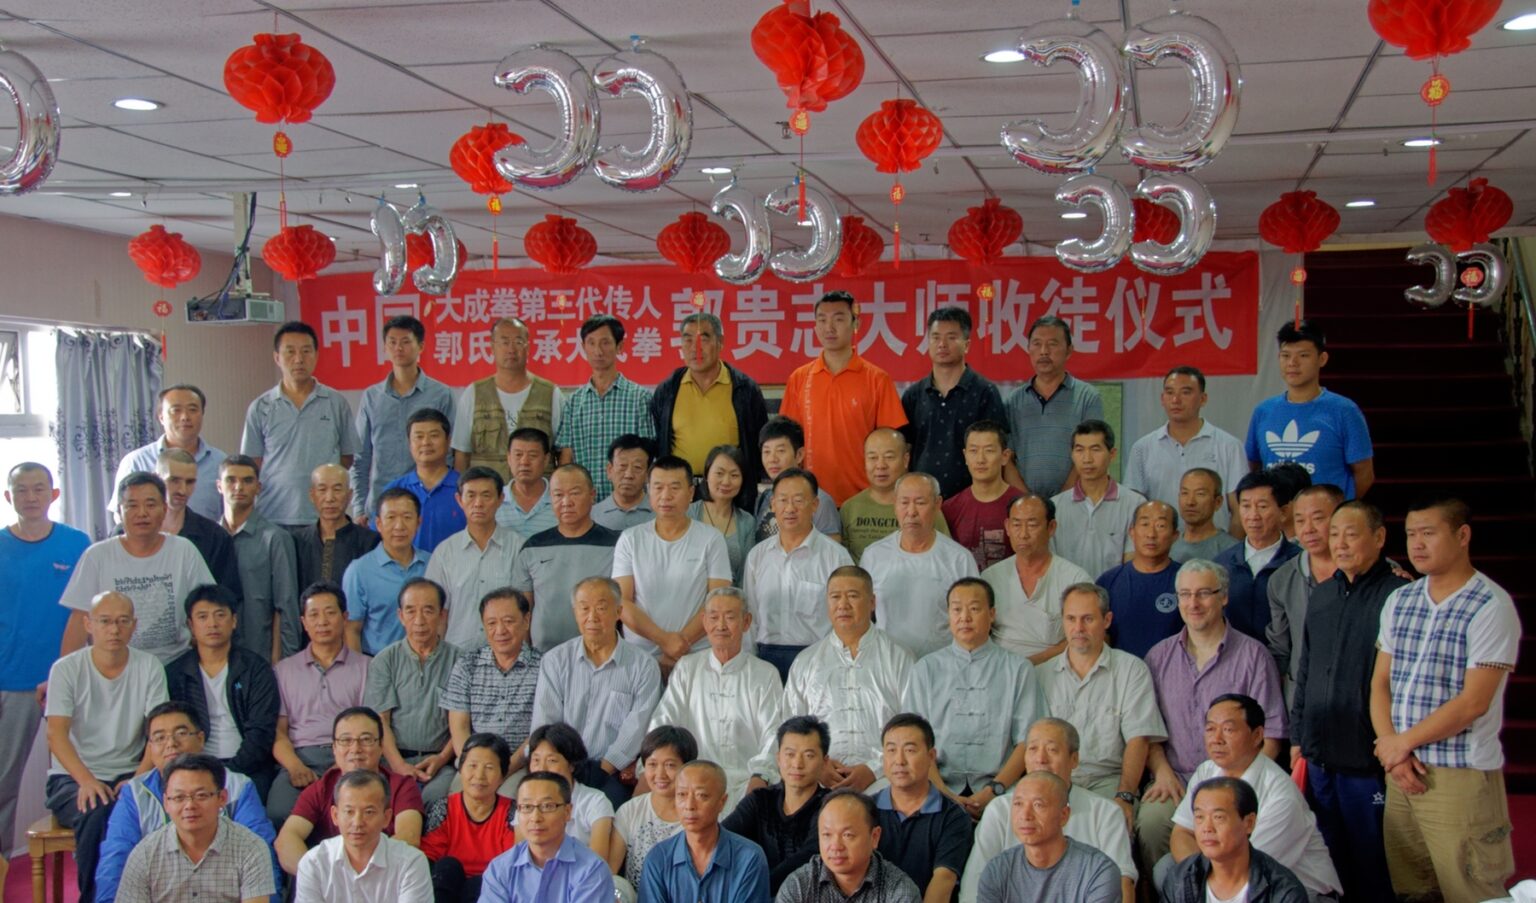 Master Guo Guzhi's disciples ceremony, 2014